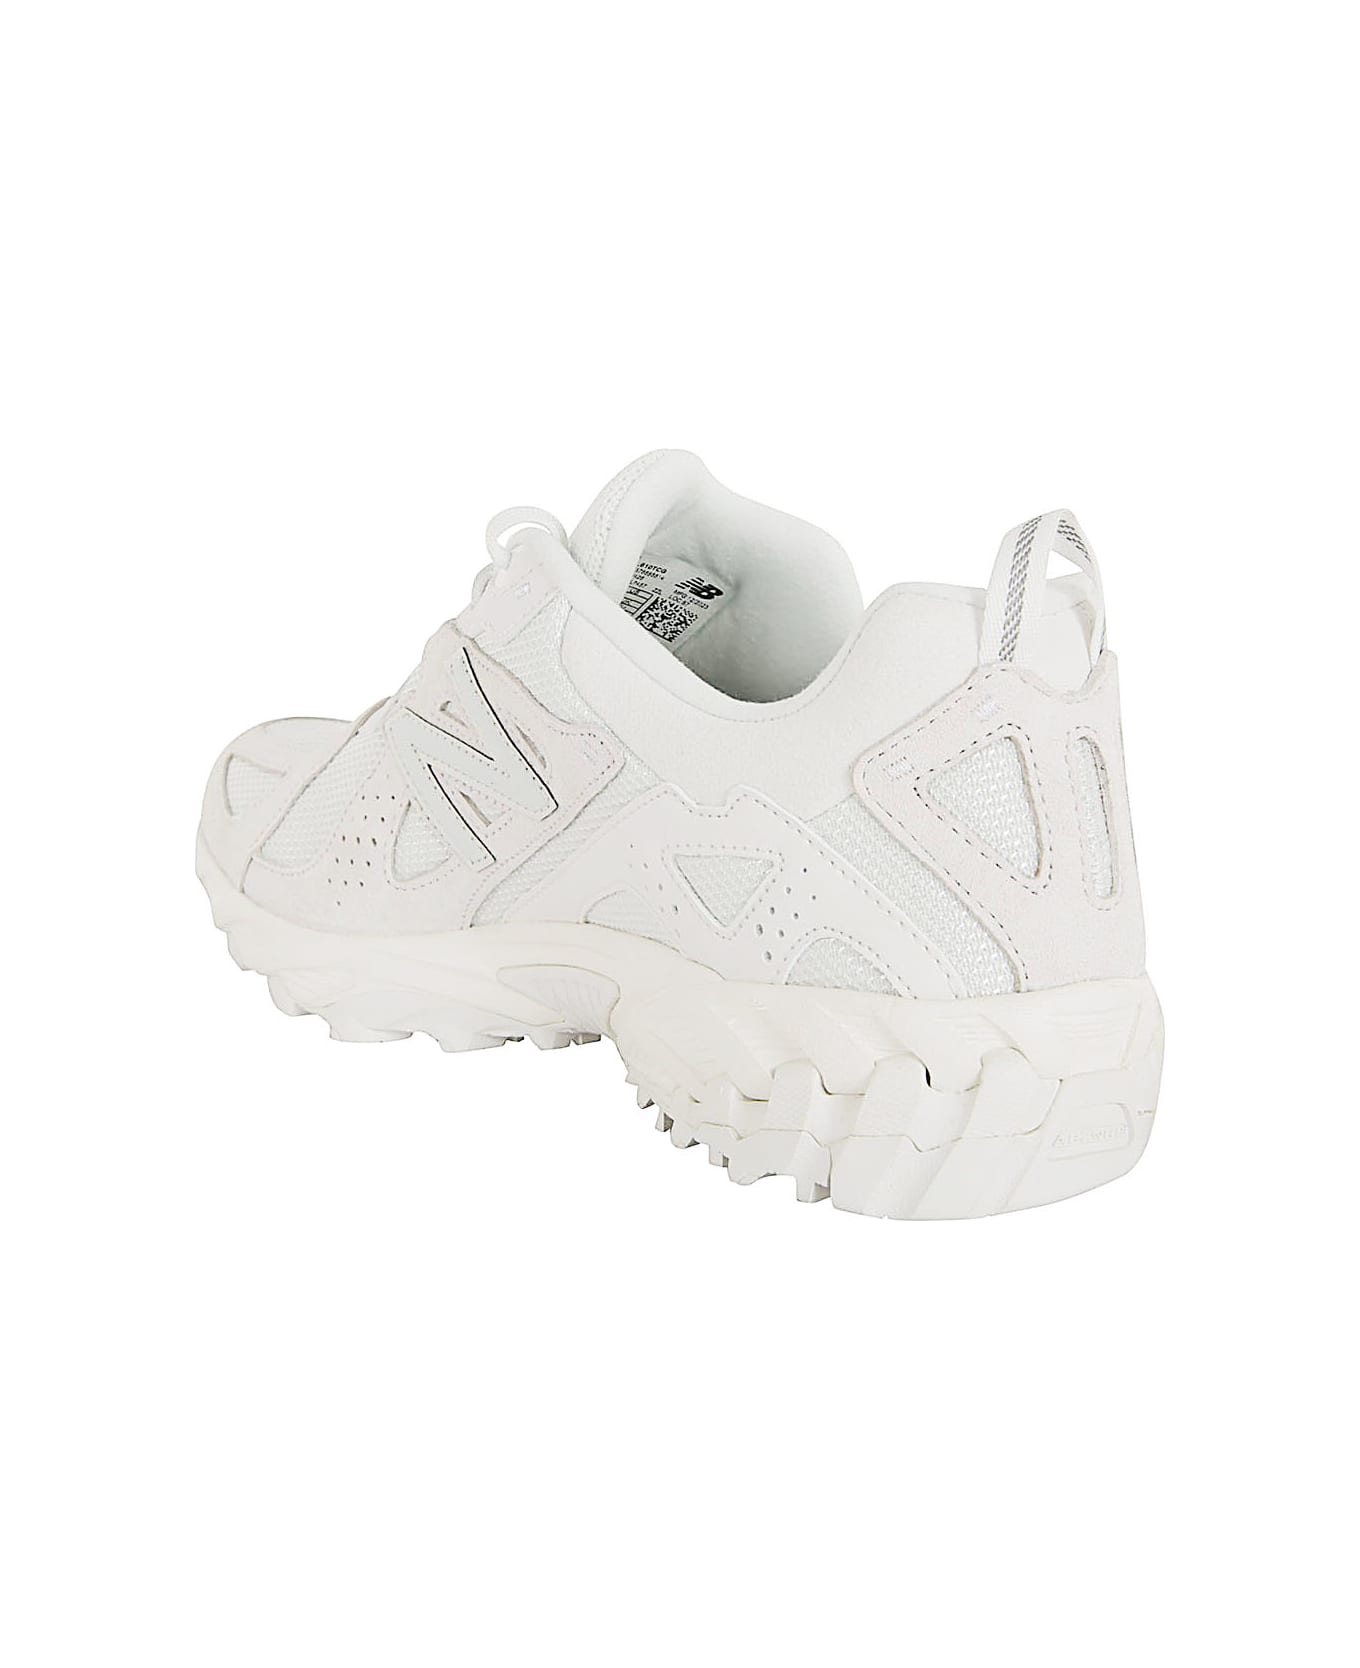 Comme des Garçons Homme New Balance Collab Sneakers - White